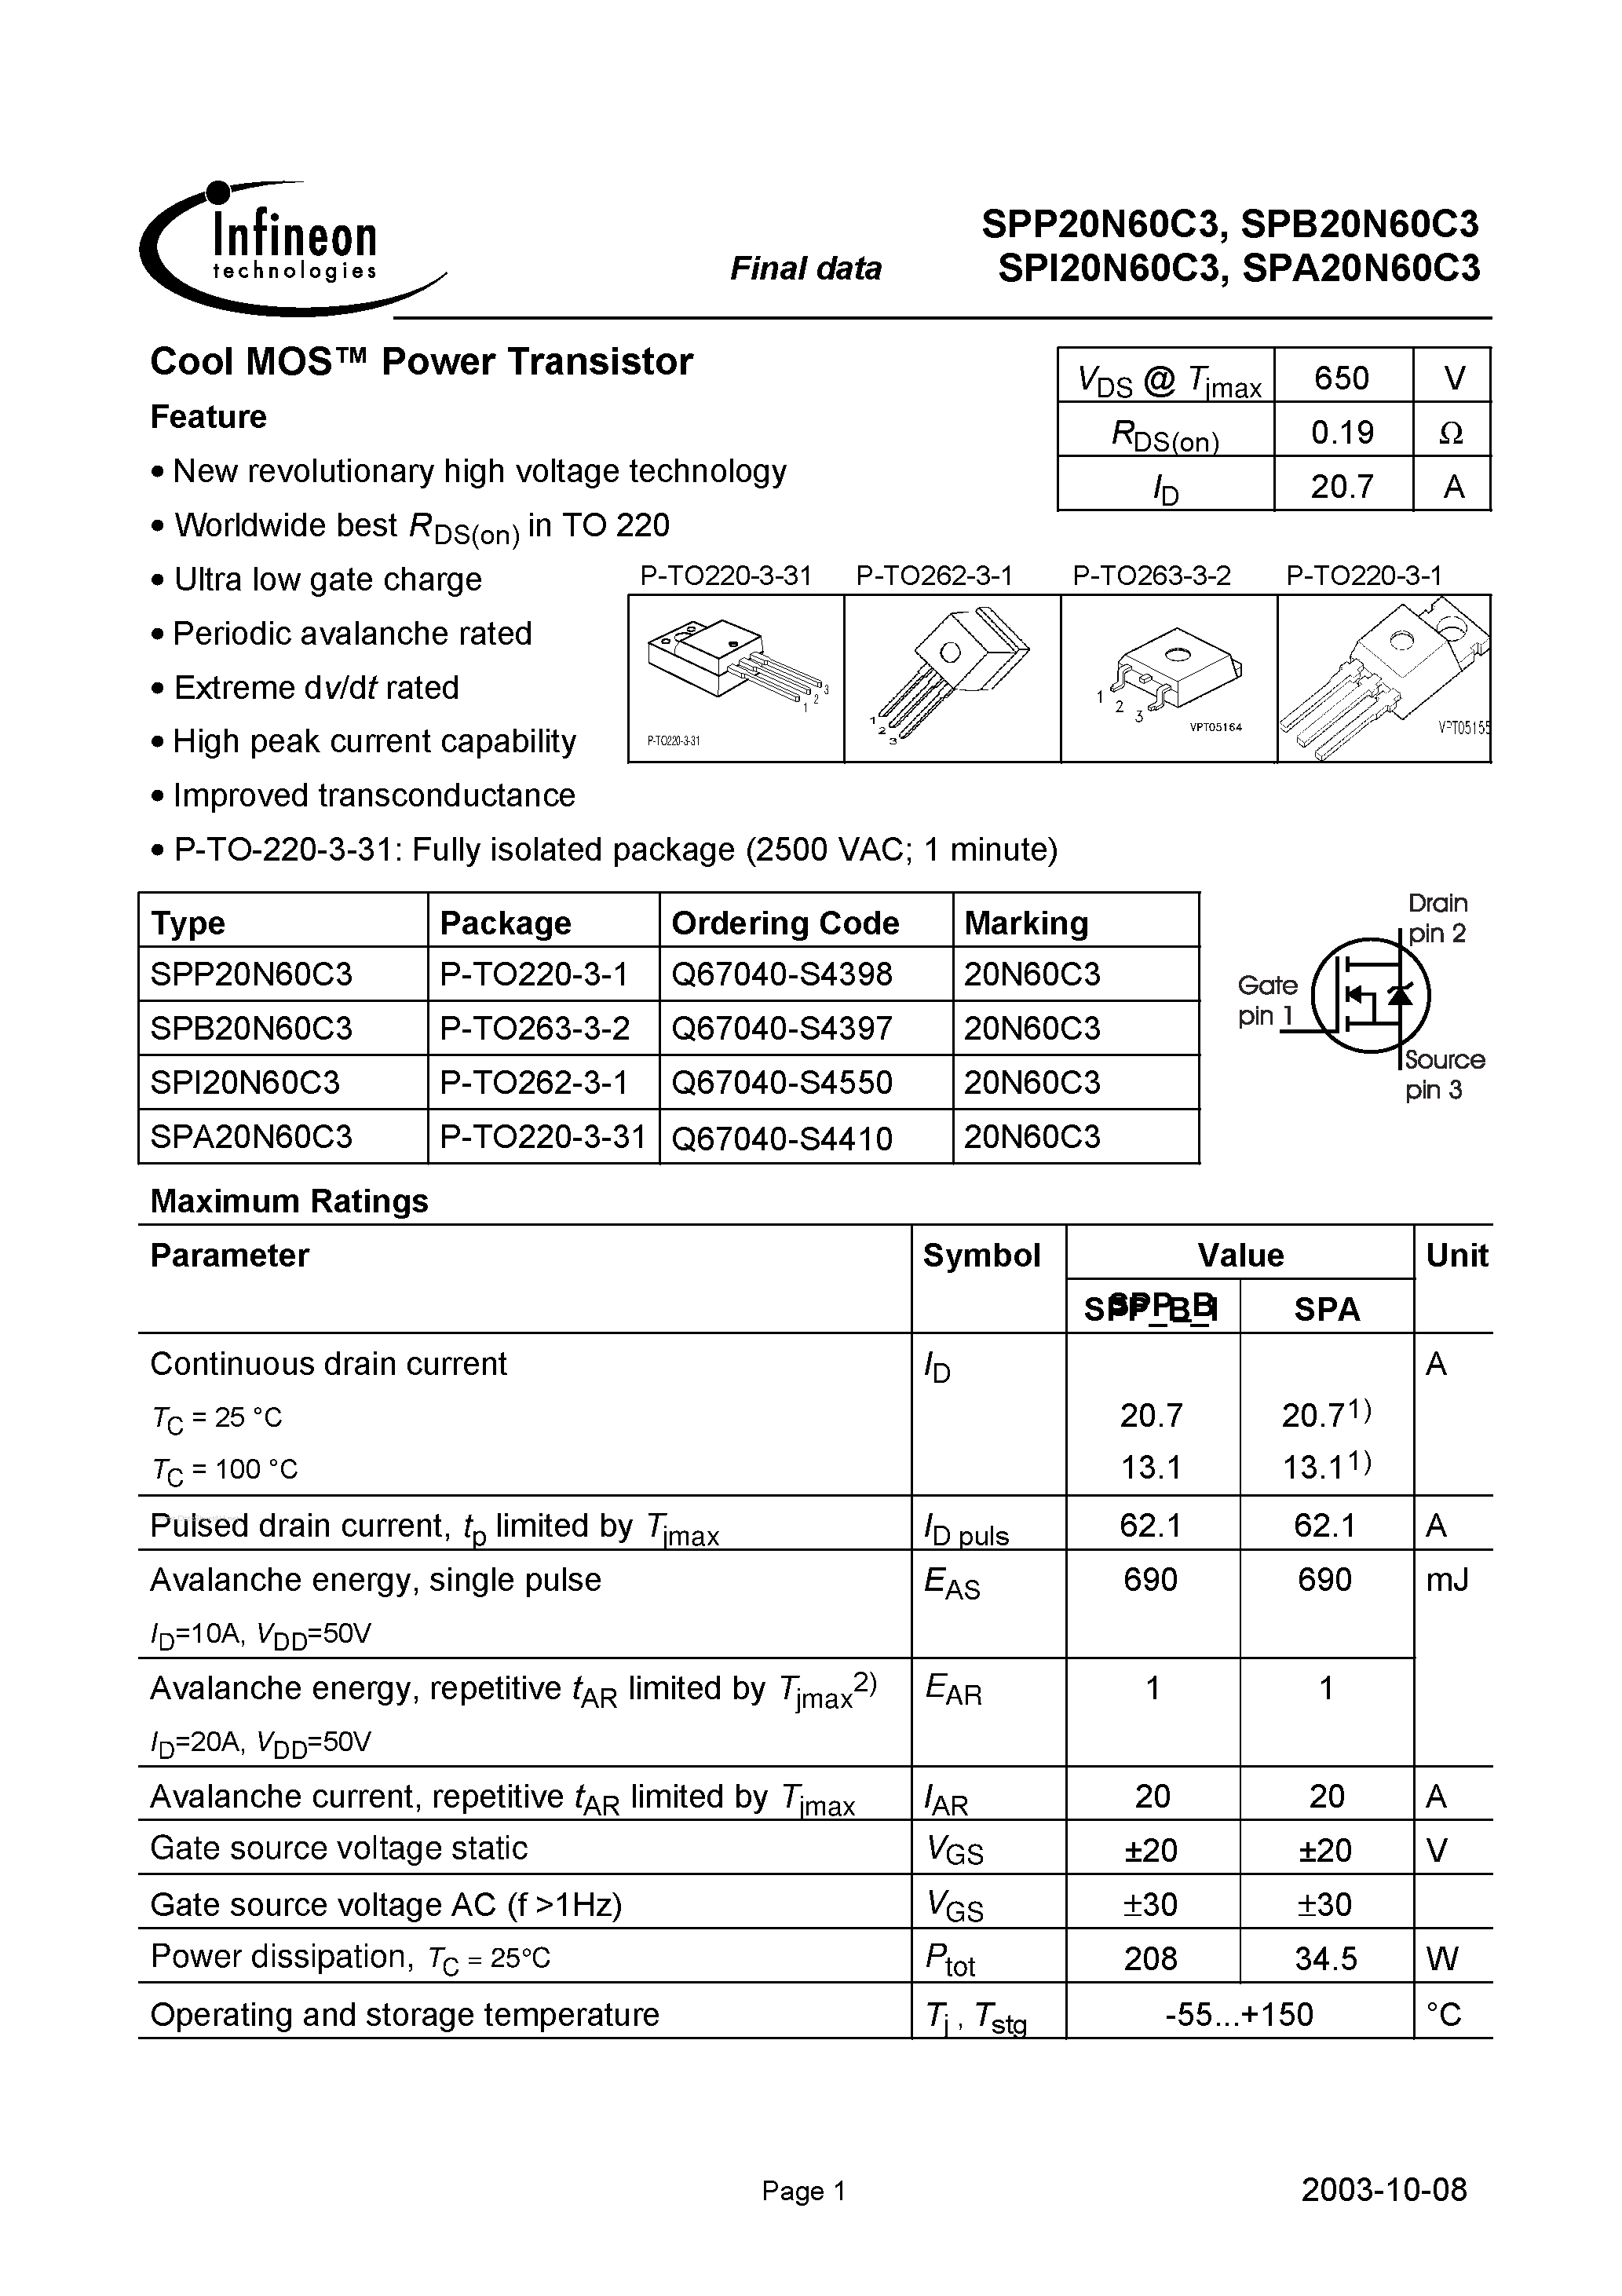 Даташит SPI20N60C3 - Cool MOS Power Transistor страница 1